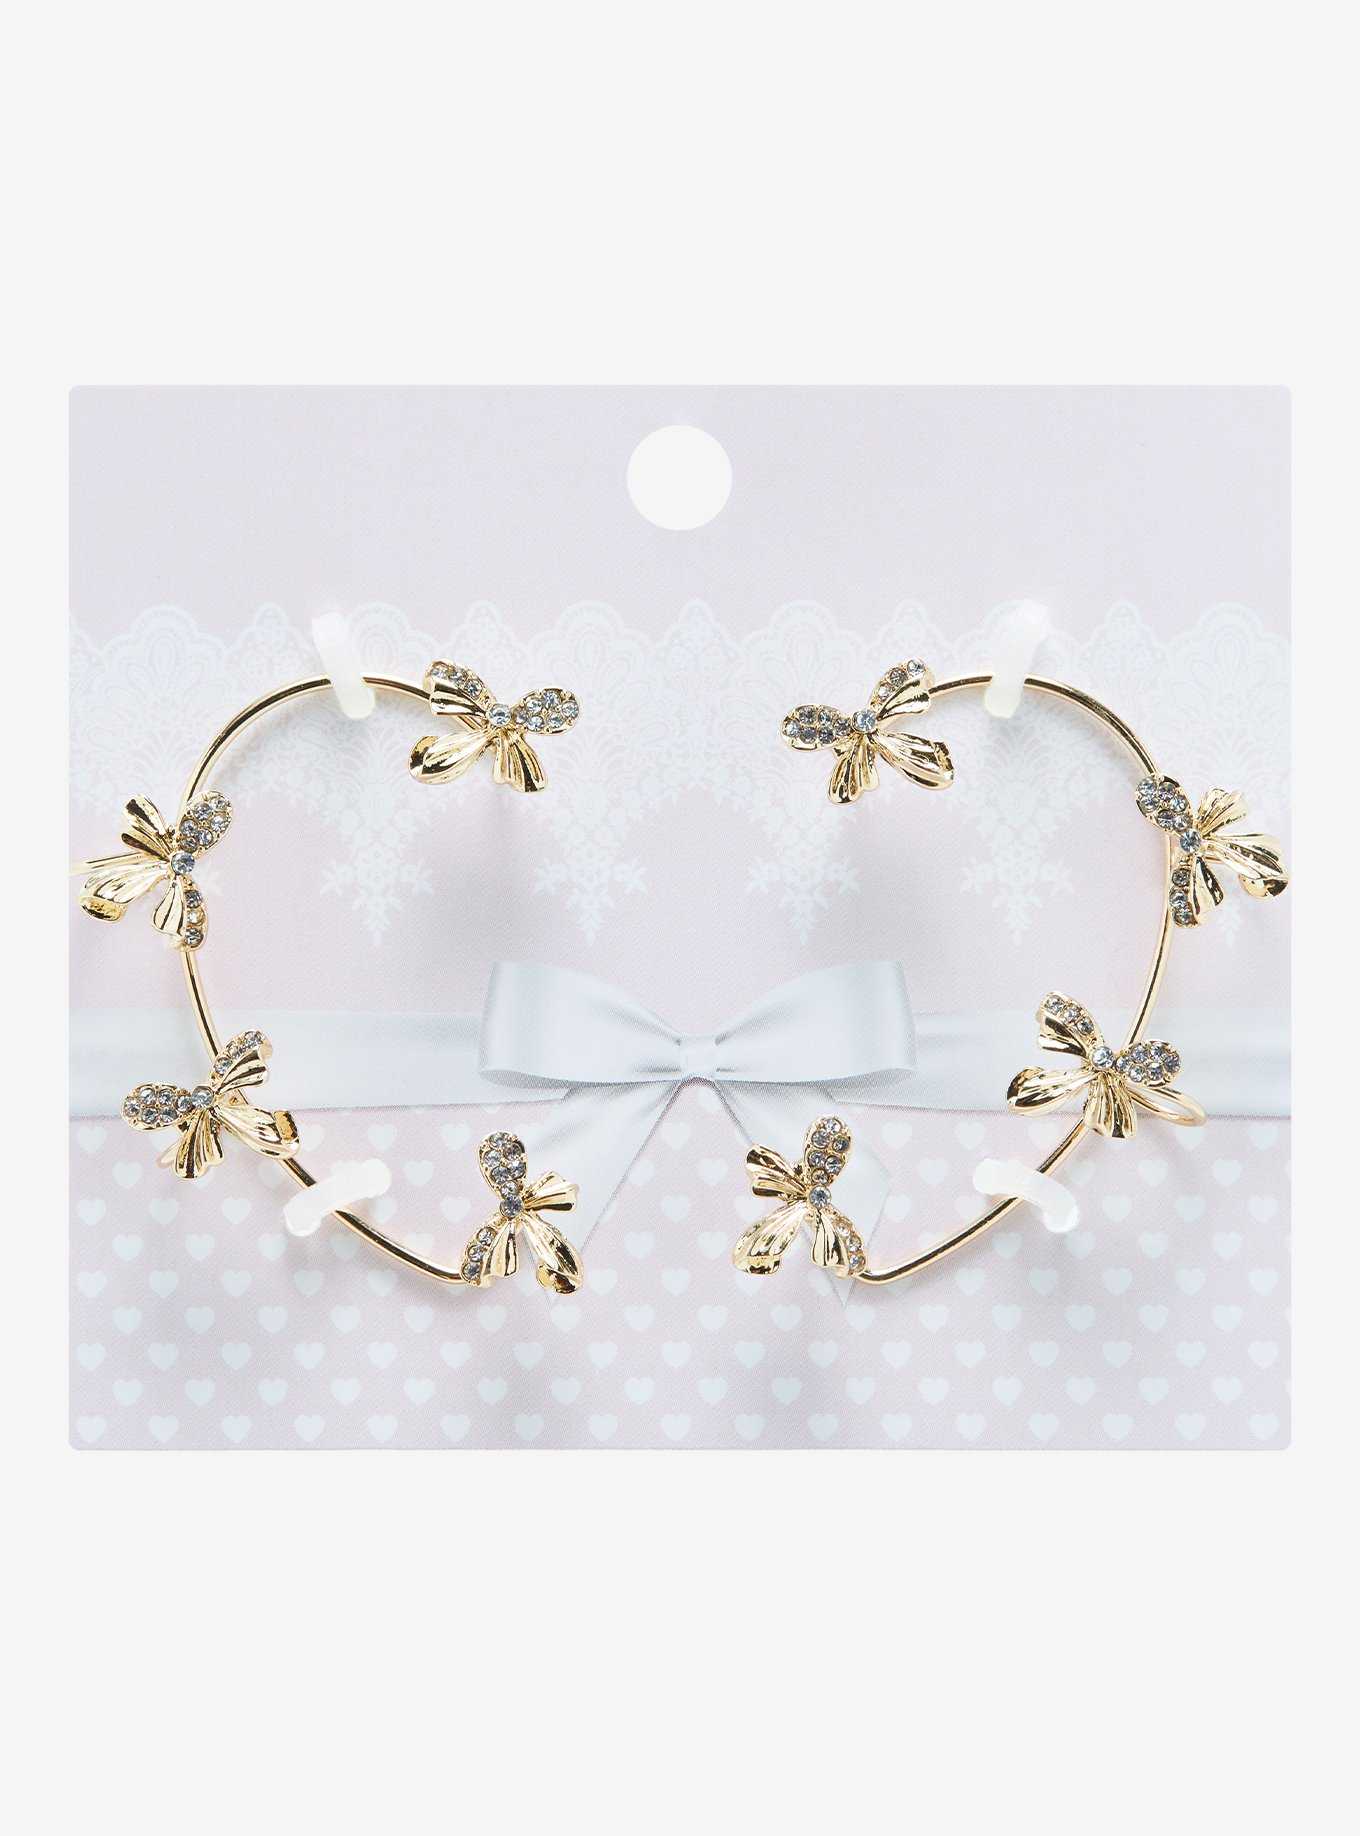 Used Jewelry Lot Hot Topic Butterfly Flower Rings Claire's Goth Charms Ear  Cuffs : สำนักงานสิทธิประโยชน์ มหาวิทยาลัยรังสิต